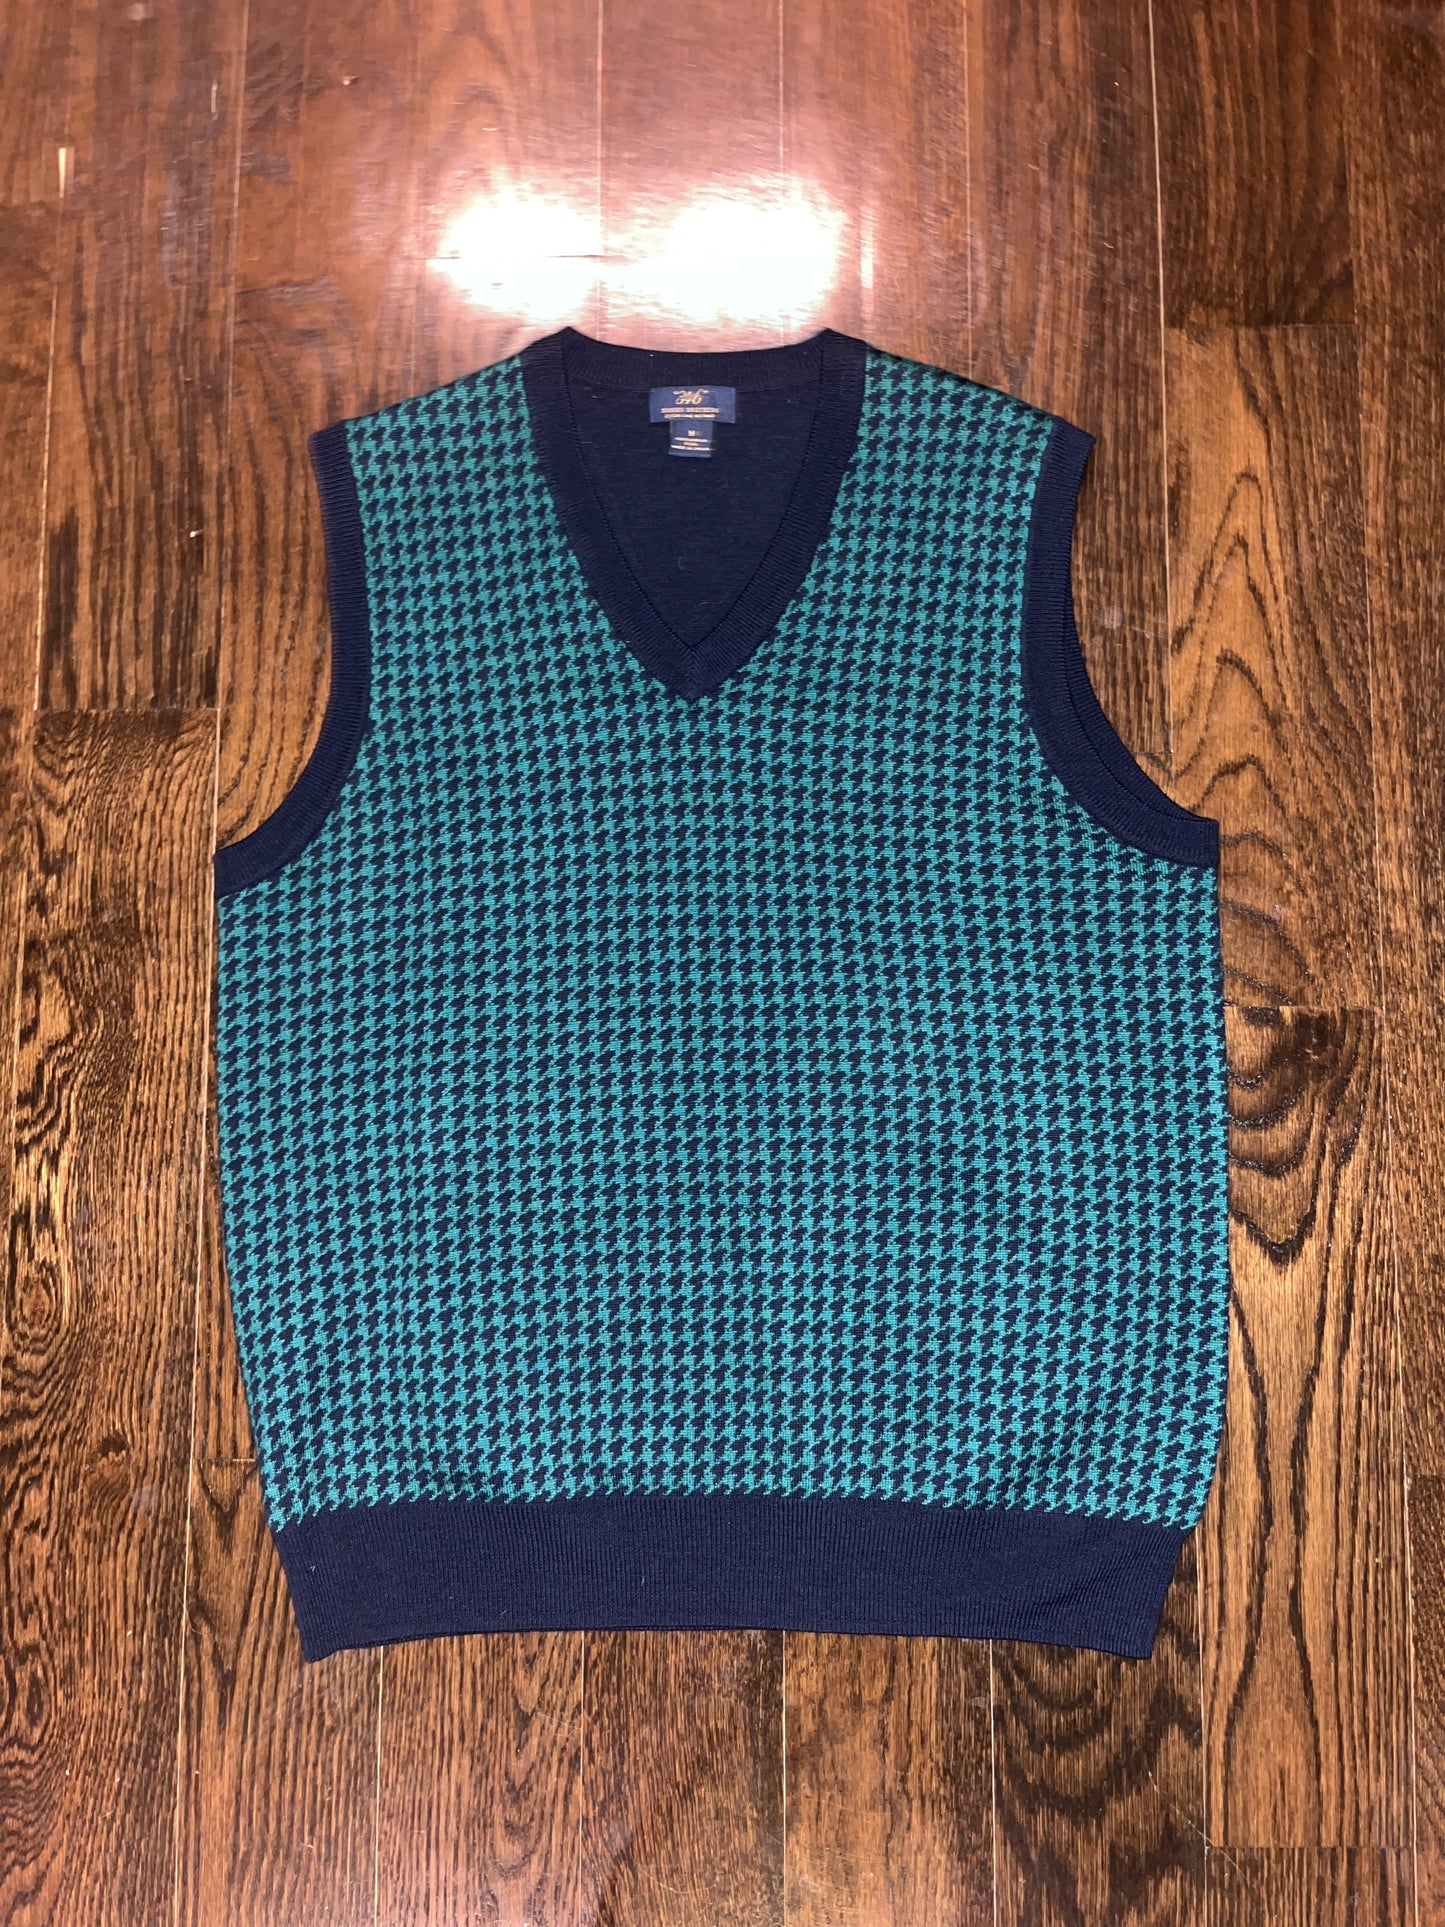 Brooks Brothers Sweater Vest (Men’s Medium)